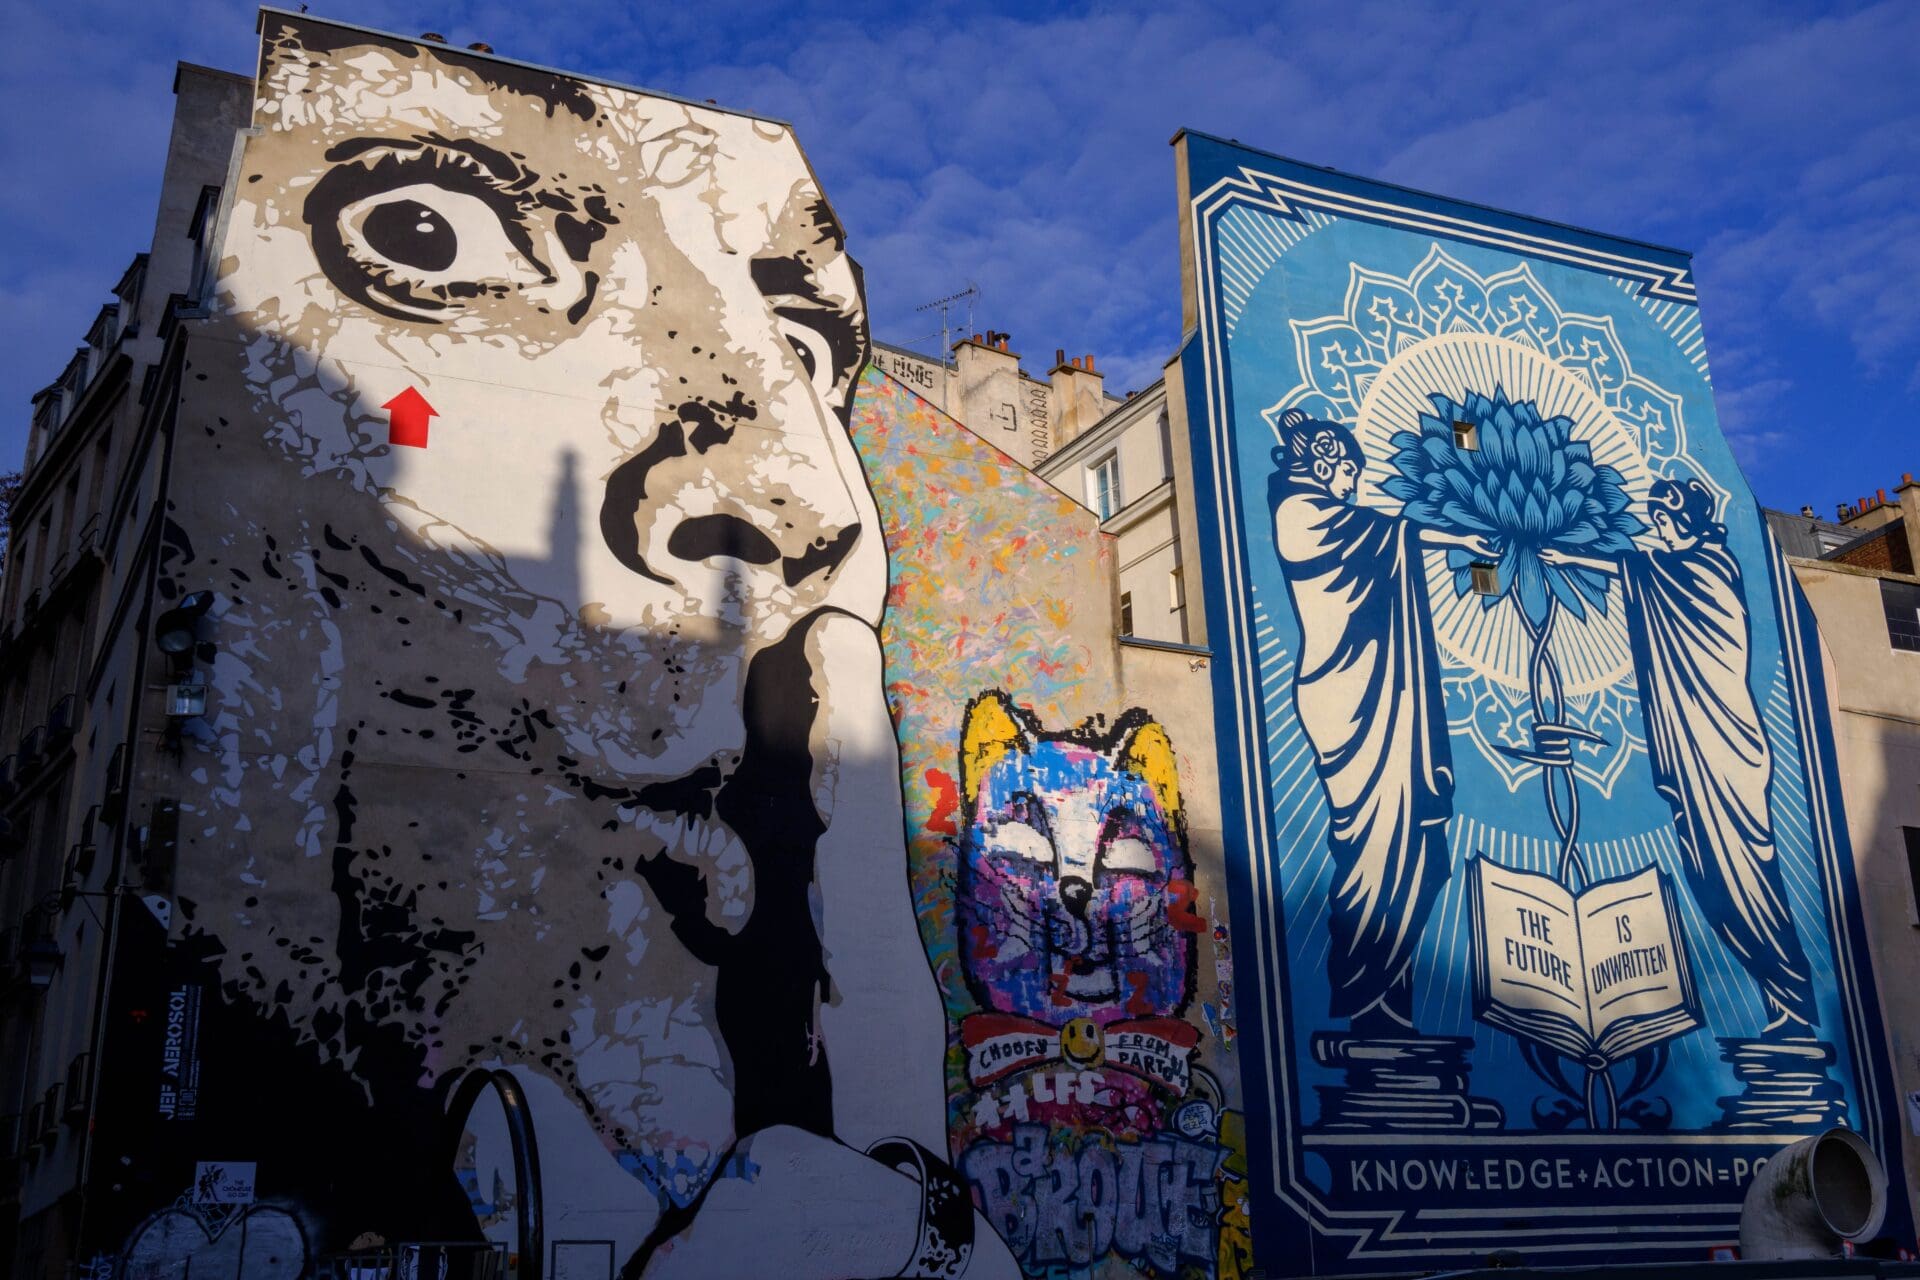 Is the hidden gem dead? A celebrated wall of graffiti in Paris